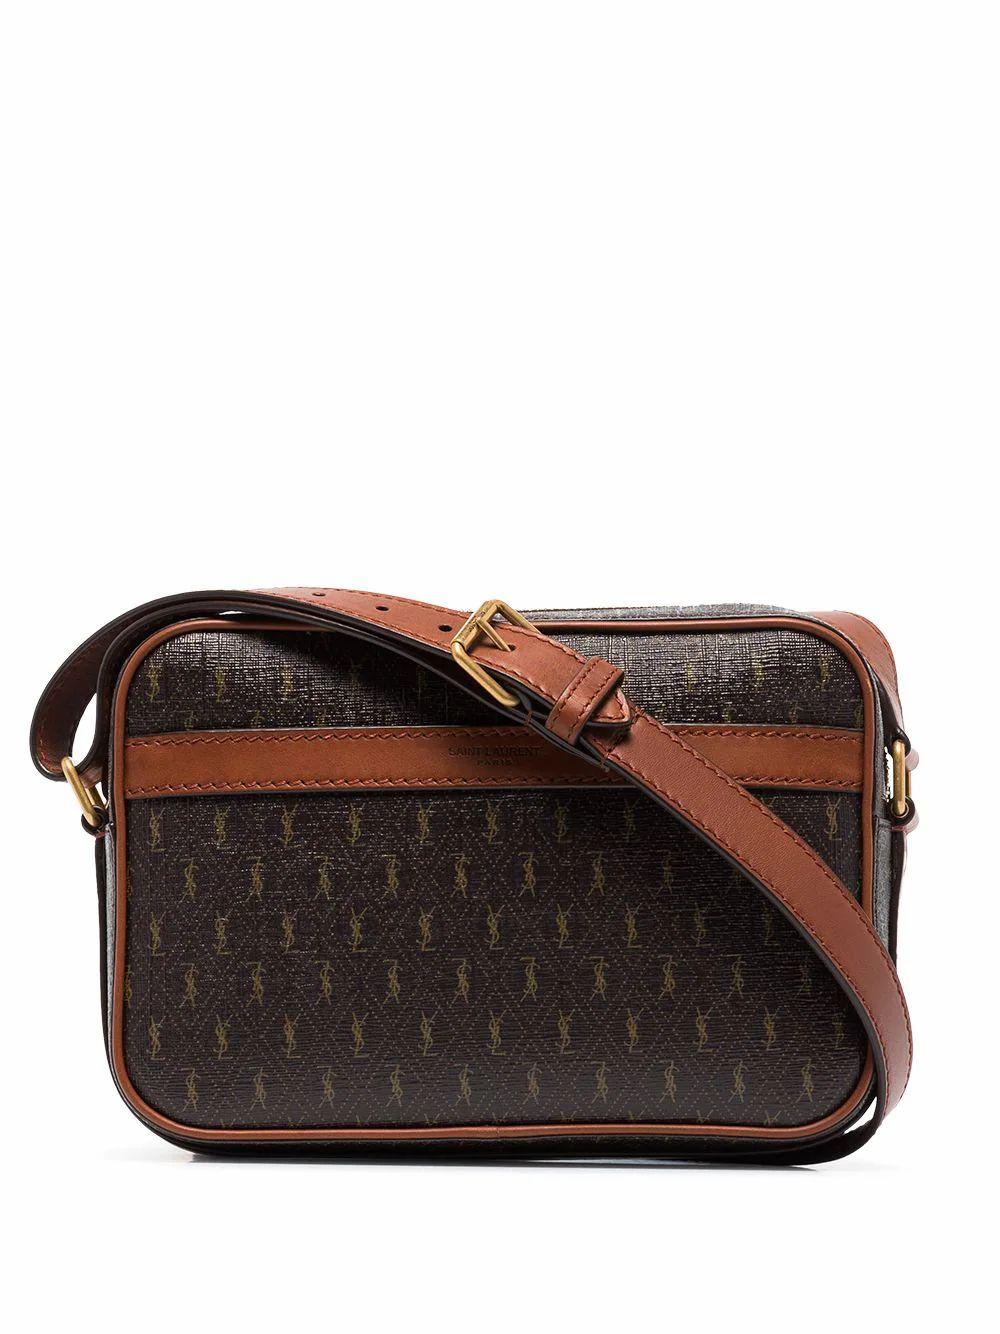 Need advice) thoughts on the SAINT LAURENT Le Monogramme mini leather  camera bag? : r/handbags